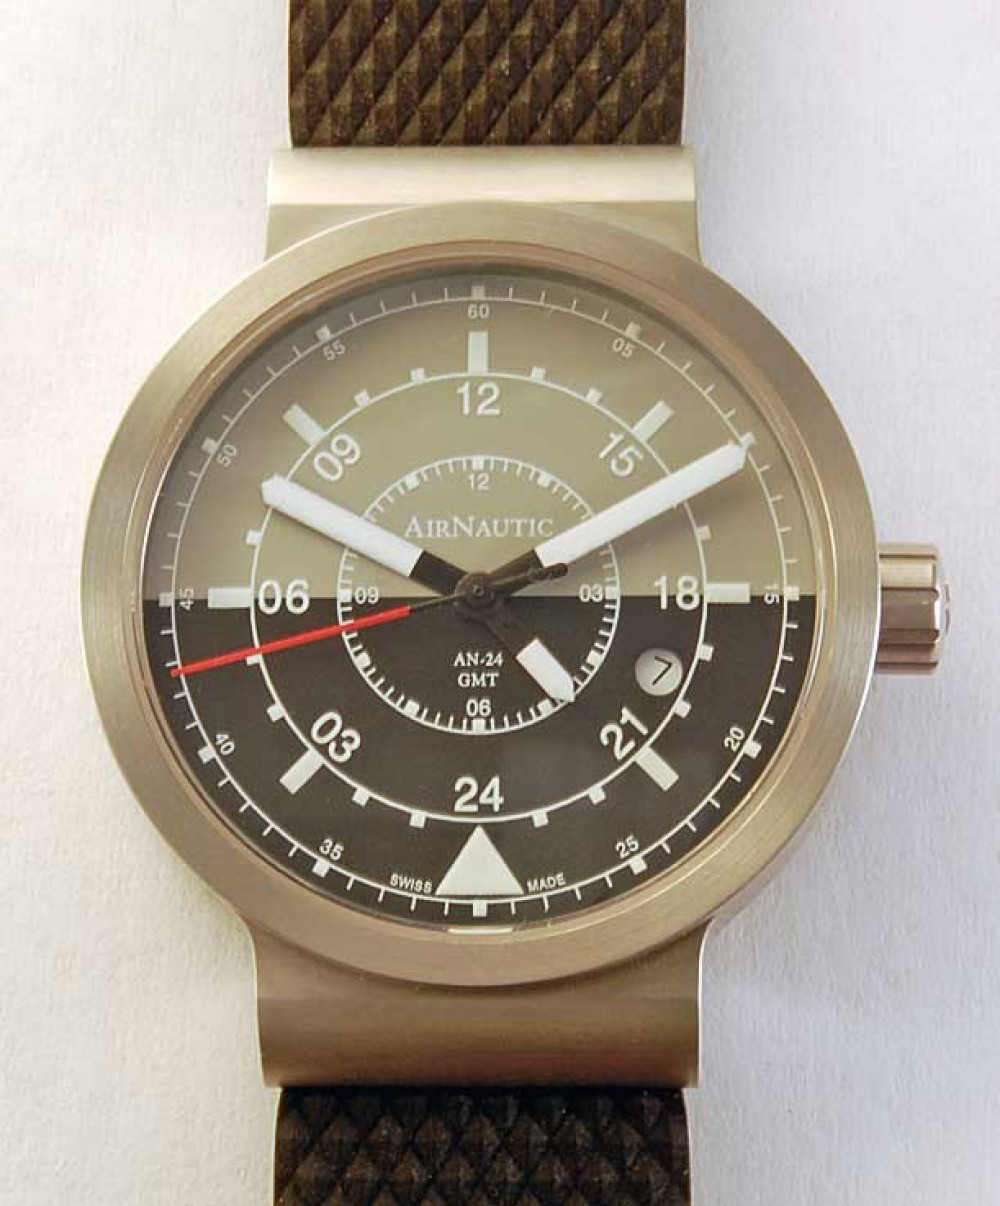 Zegarek firmy Airnautic, model AN-24 GMT